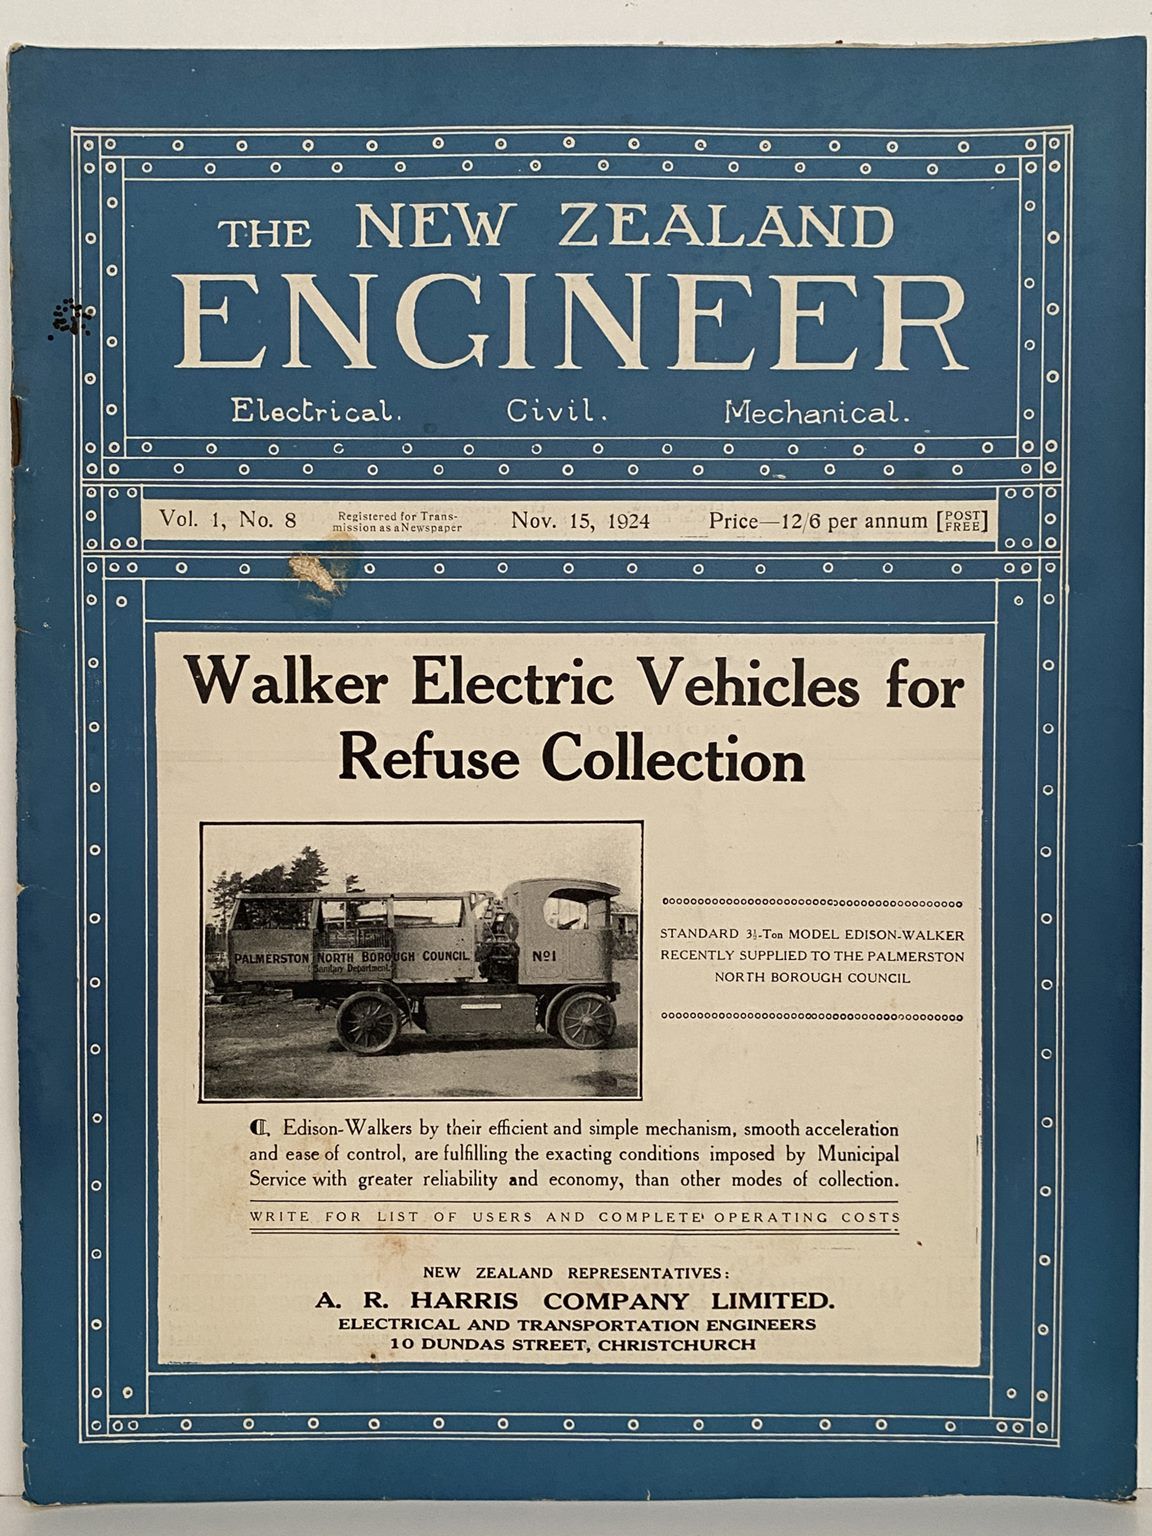 OLD MAGAZINE: The New Zealand Engineer Vol. 1, No. 8 - 15 November 1924